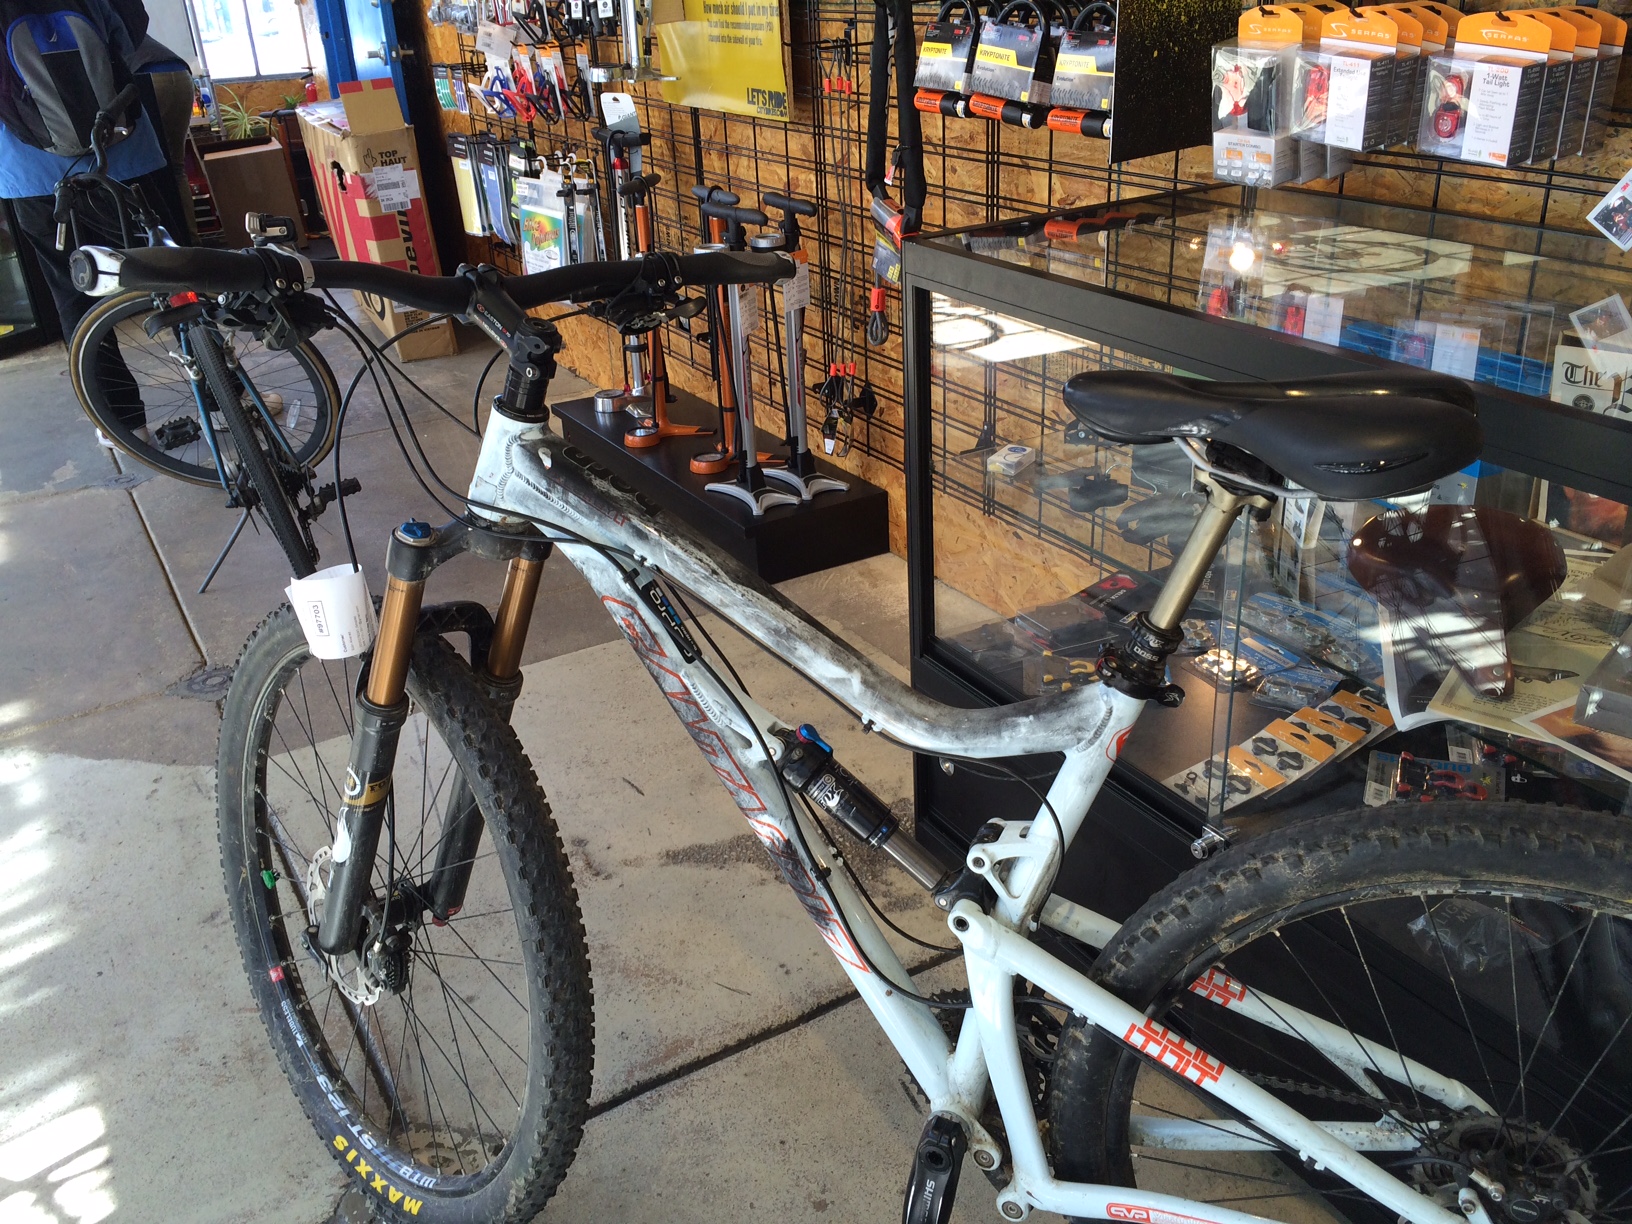 With help of City Bikes, customer gets stolen bike back